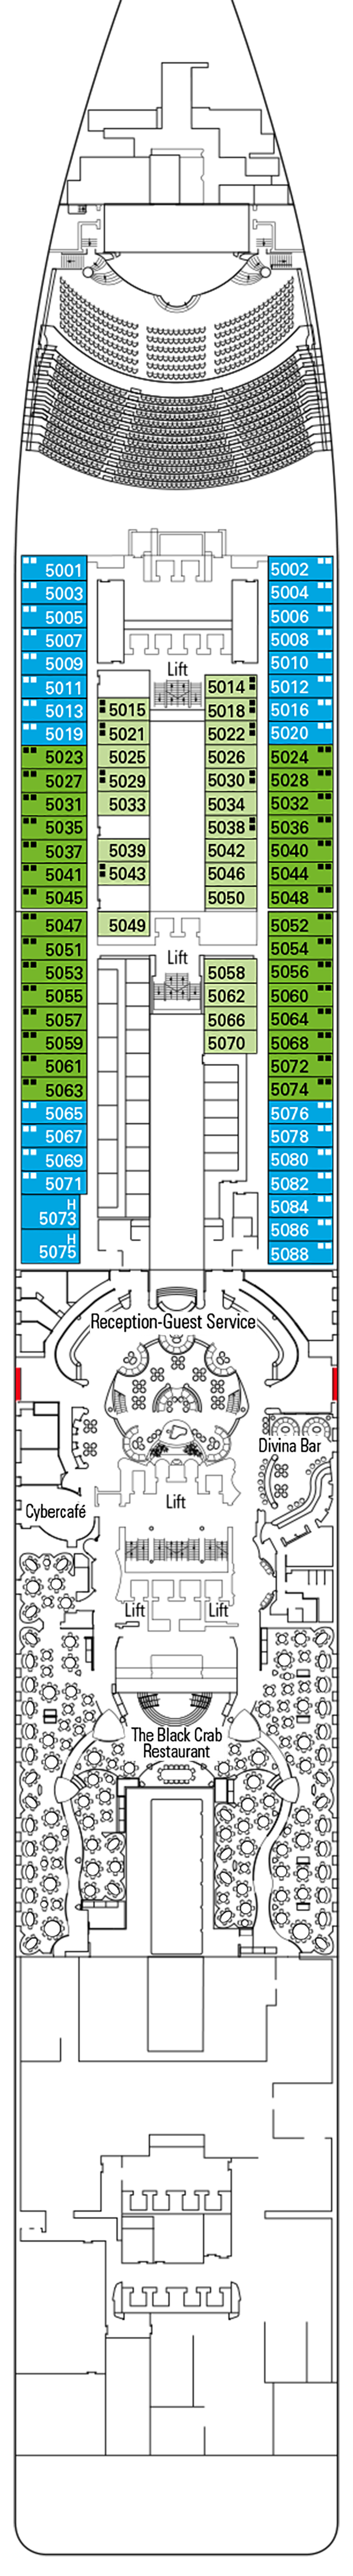 Deck Plan for MSC Divina Iglu Cruise